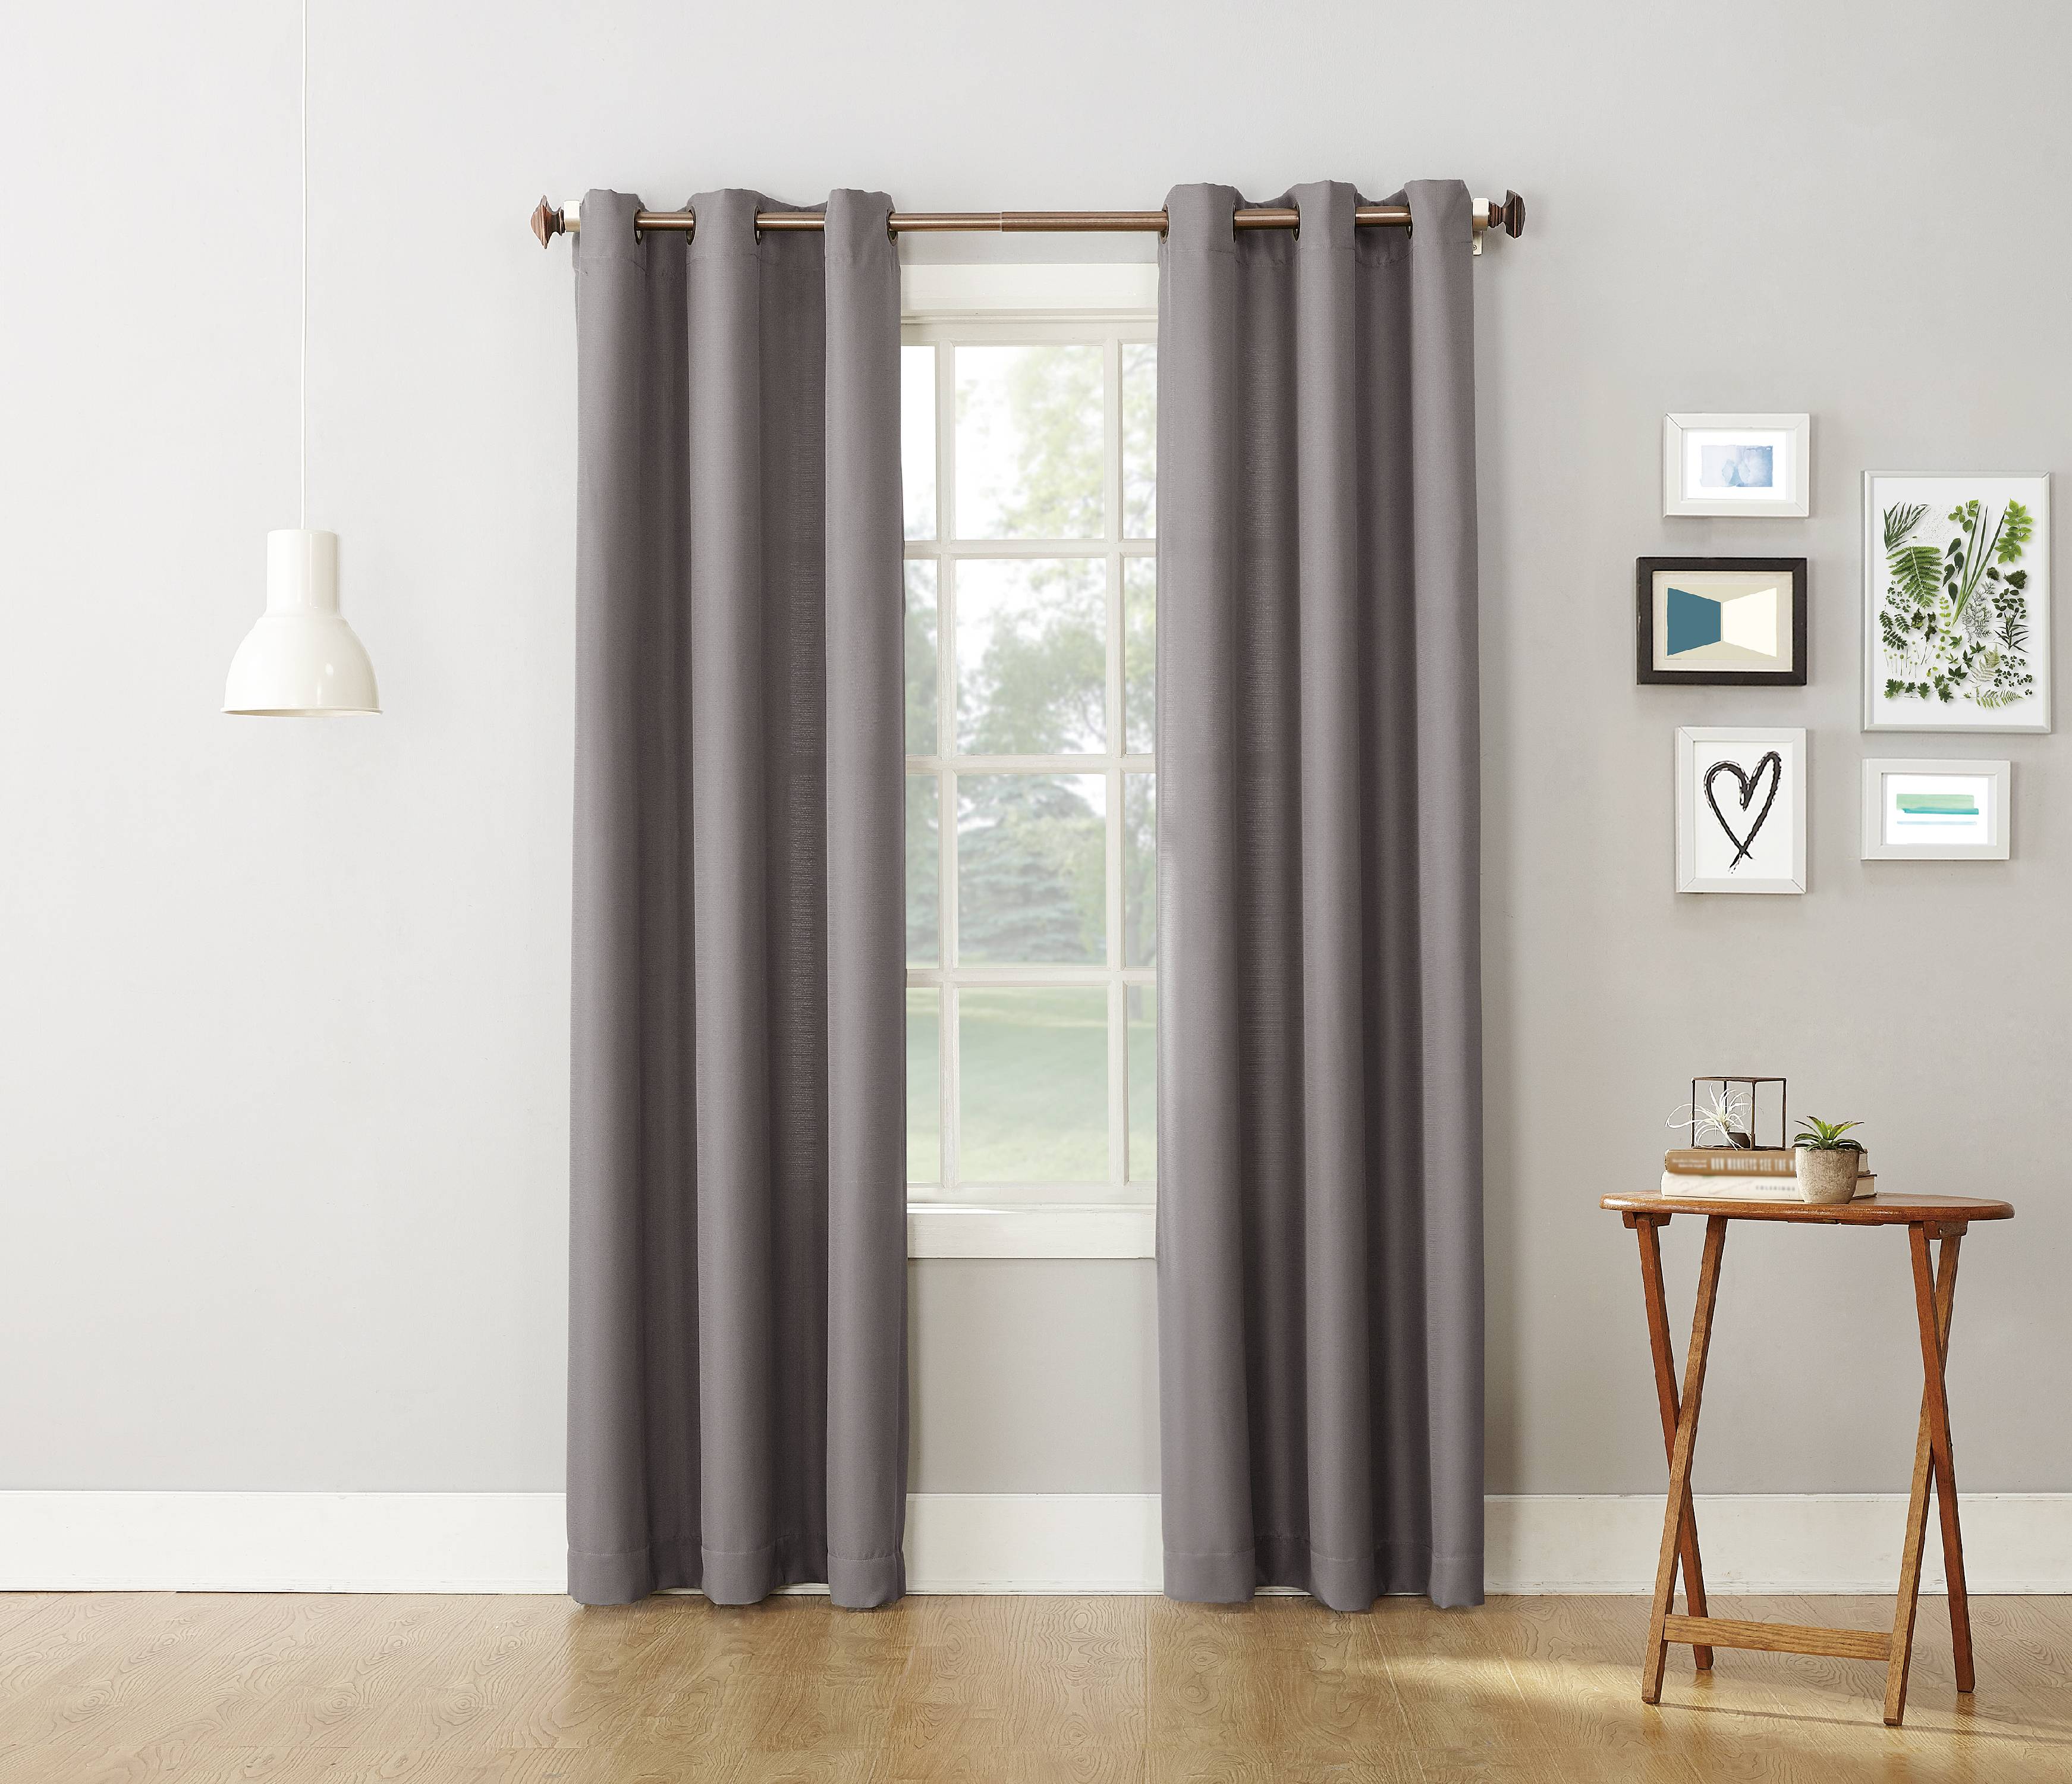 No. 918 Grommet Semi-Sheer Curtain Panel, 48.0" x 84.0" - image 4 of 7